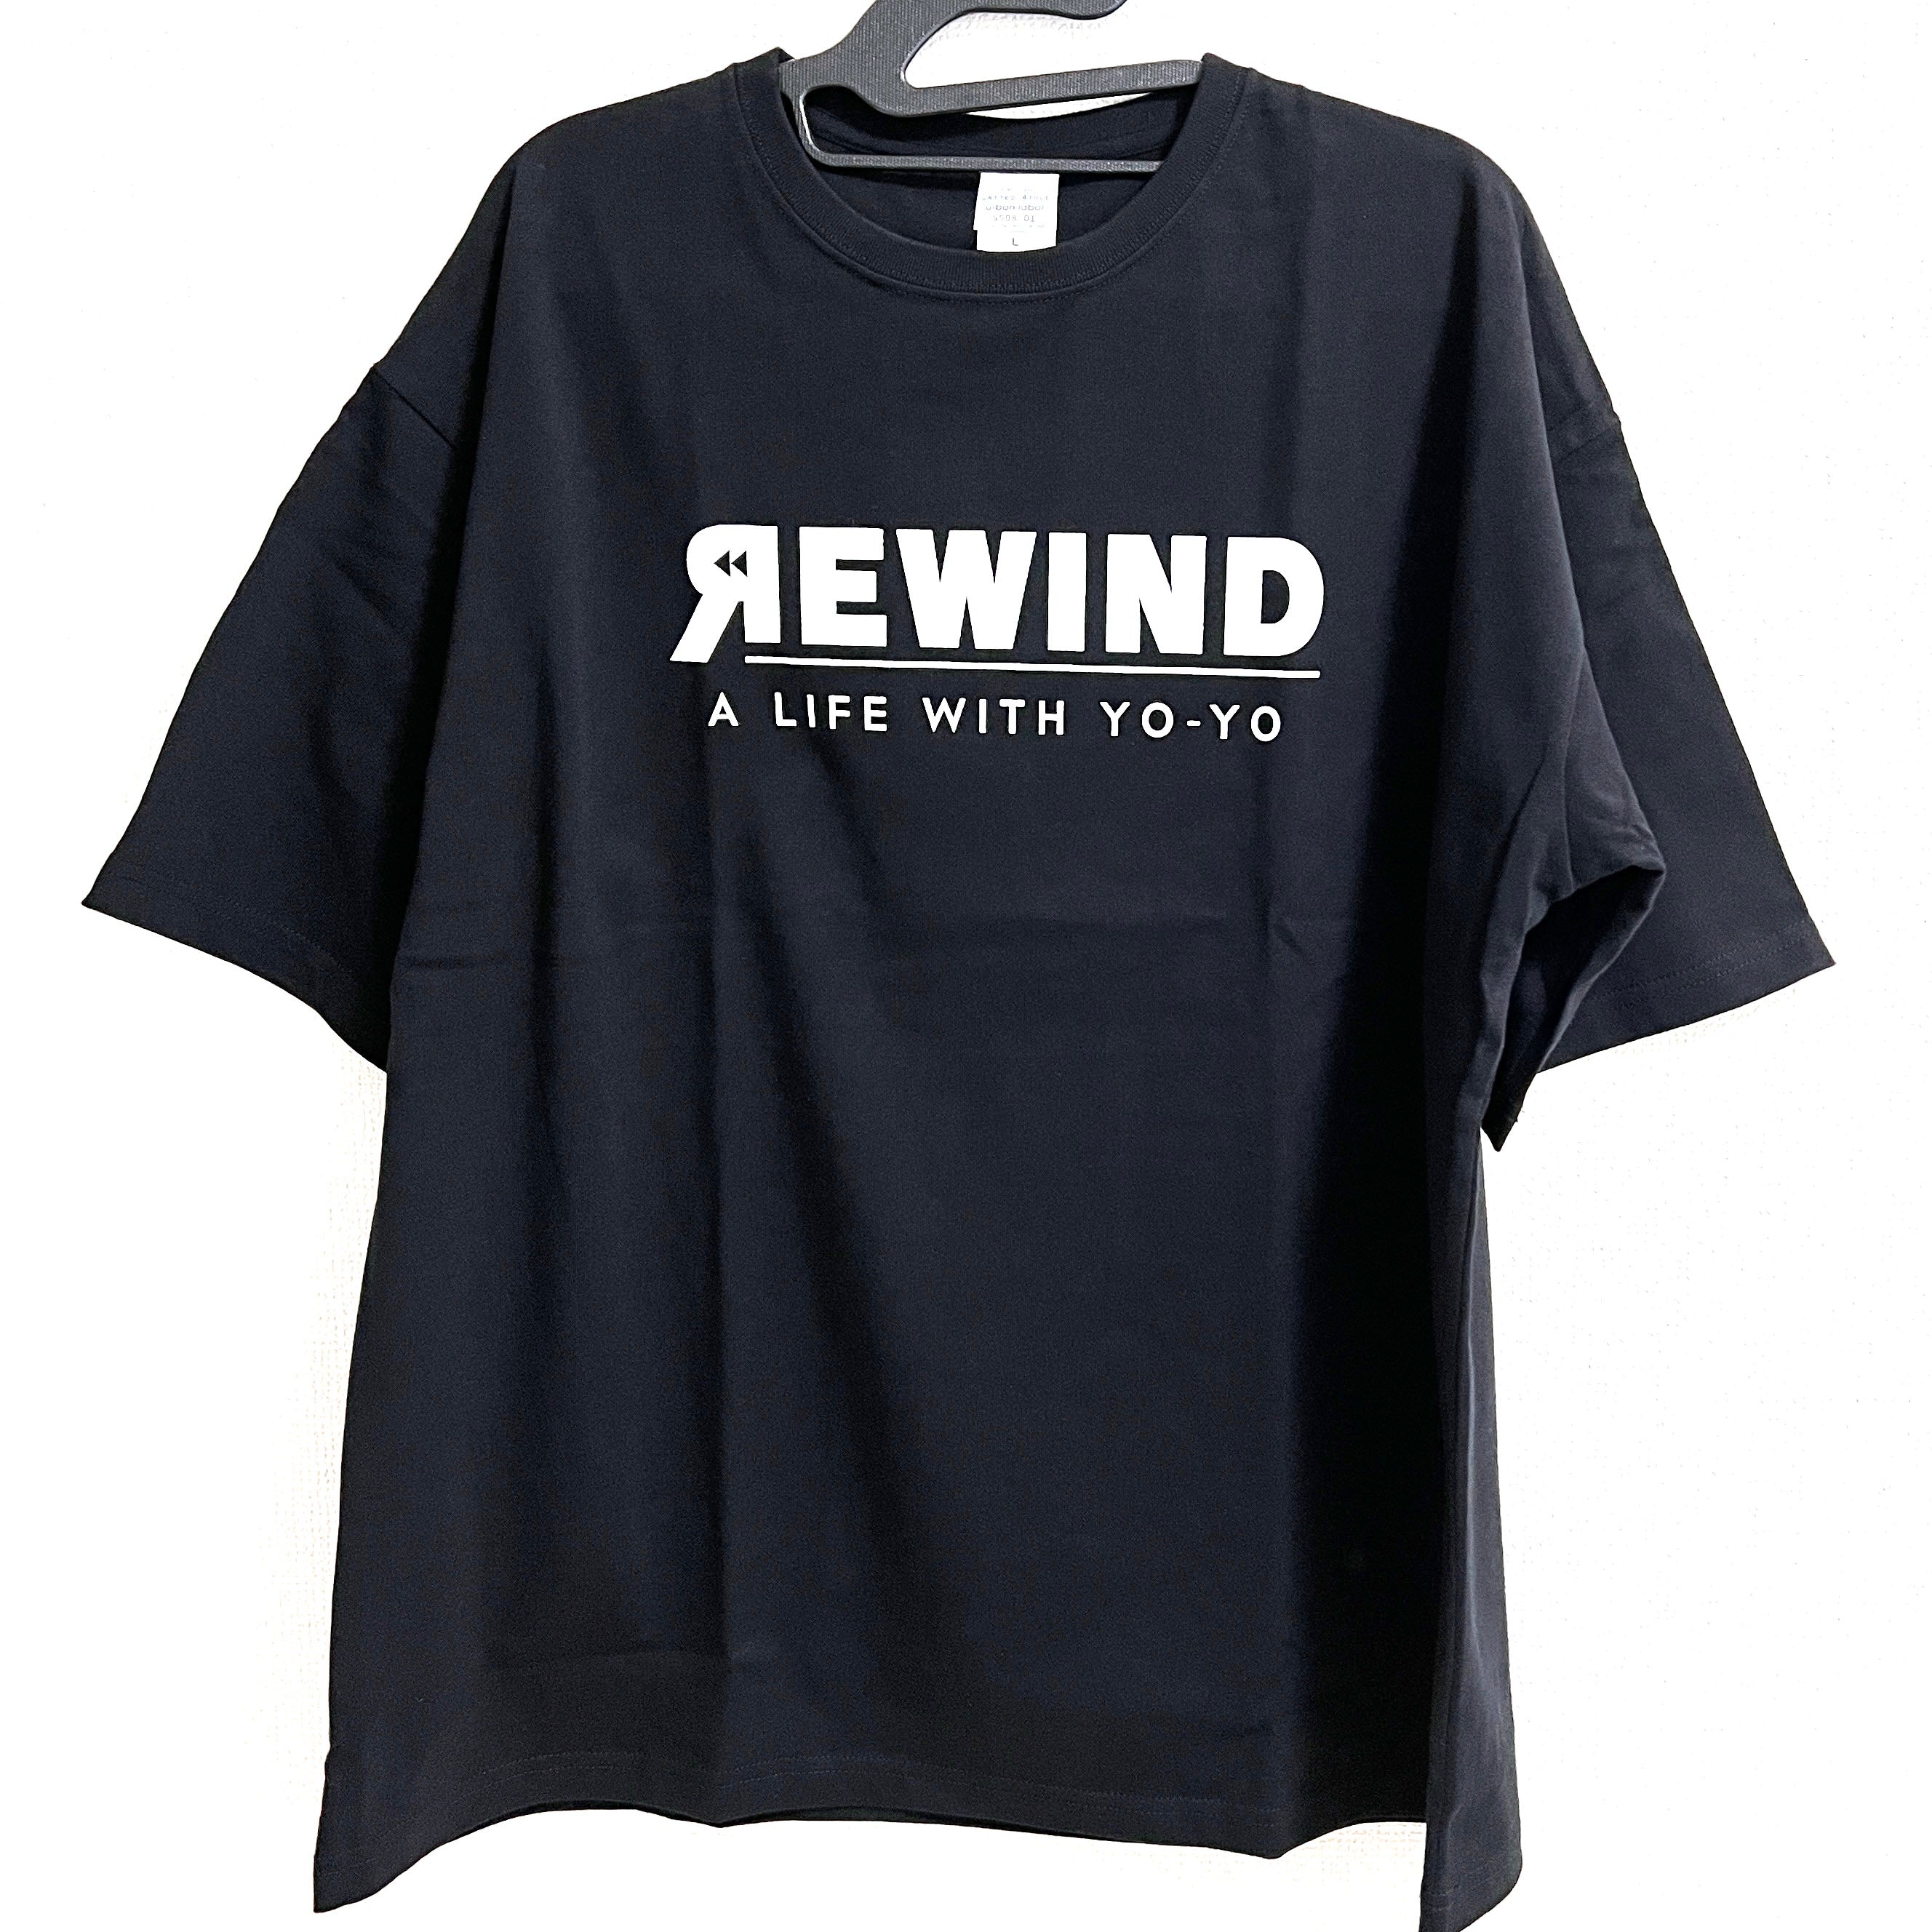 REWIND Loose Fitting Silhouette T-shirt (Black / White Logo)